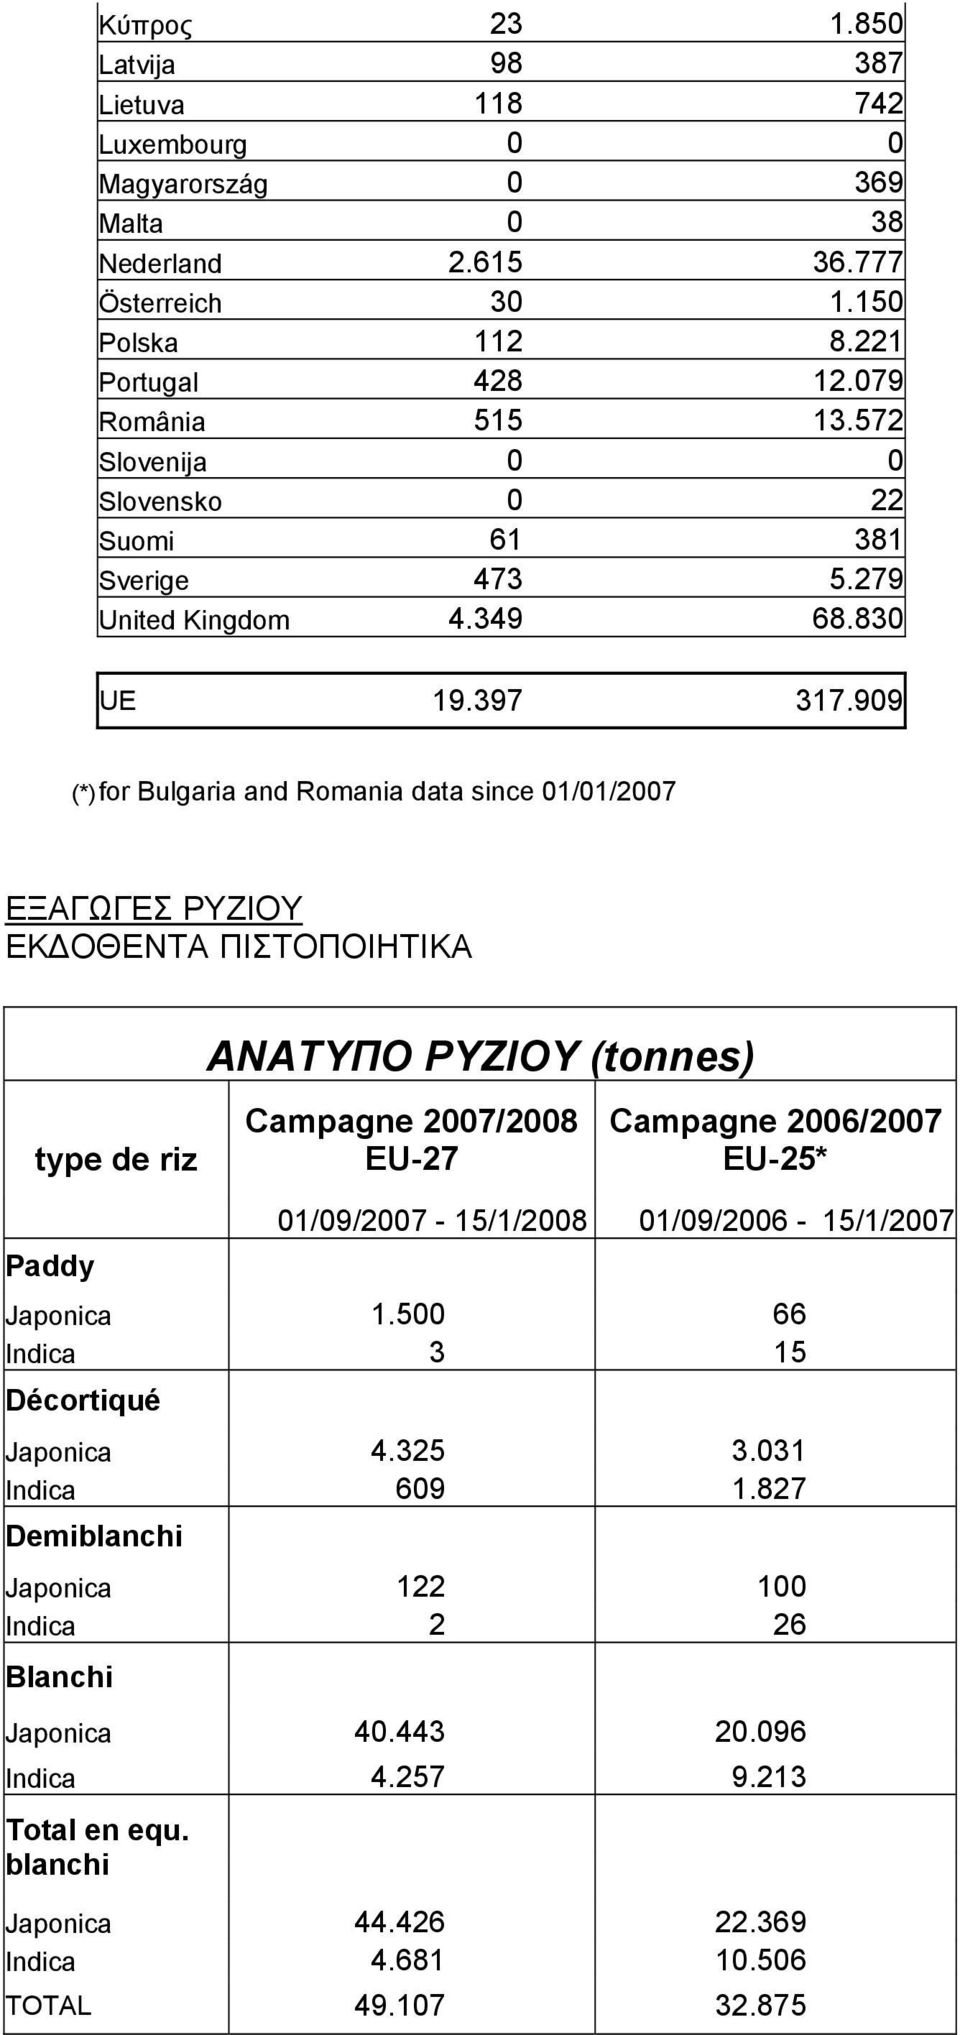 909 (*) for Bulgaria and Romania data since 01/01/2007 ΕΞΑΓΩΓΕΣ ΡΥΖΙΟΥ ΕΚ ΟΘΕΝΤΑ ΠΙΣΤΟΠΟΙΗΤΙΚΑ ΑΝΑΤΥΠΟ ΡΥΖΙΟΥ (tonnes) type de riz Campagne 2007/2008 EU-27 Campagne 2006/2007 EU-25* Paddy